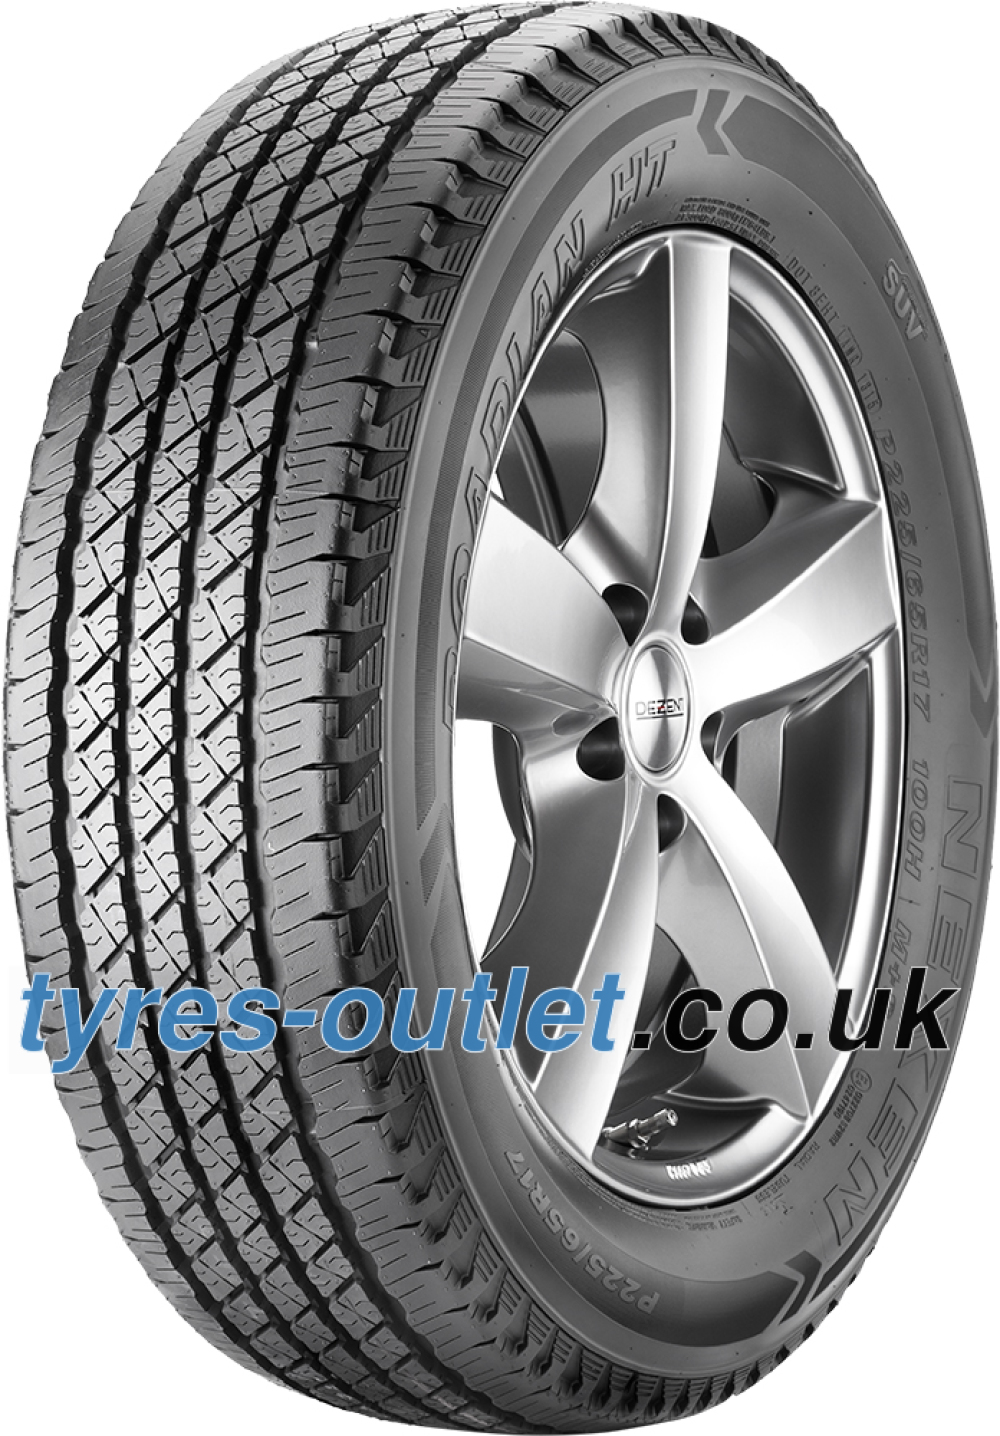 Nexen Roadian HT P235/65 R17 103S ROWL - tyres-outlet.co.uk